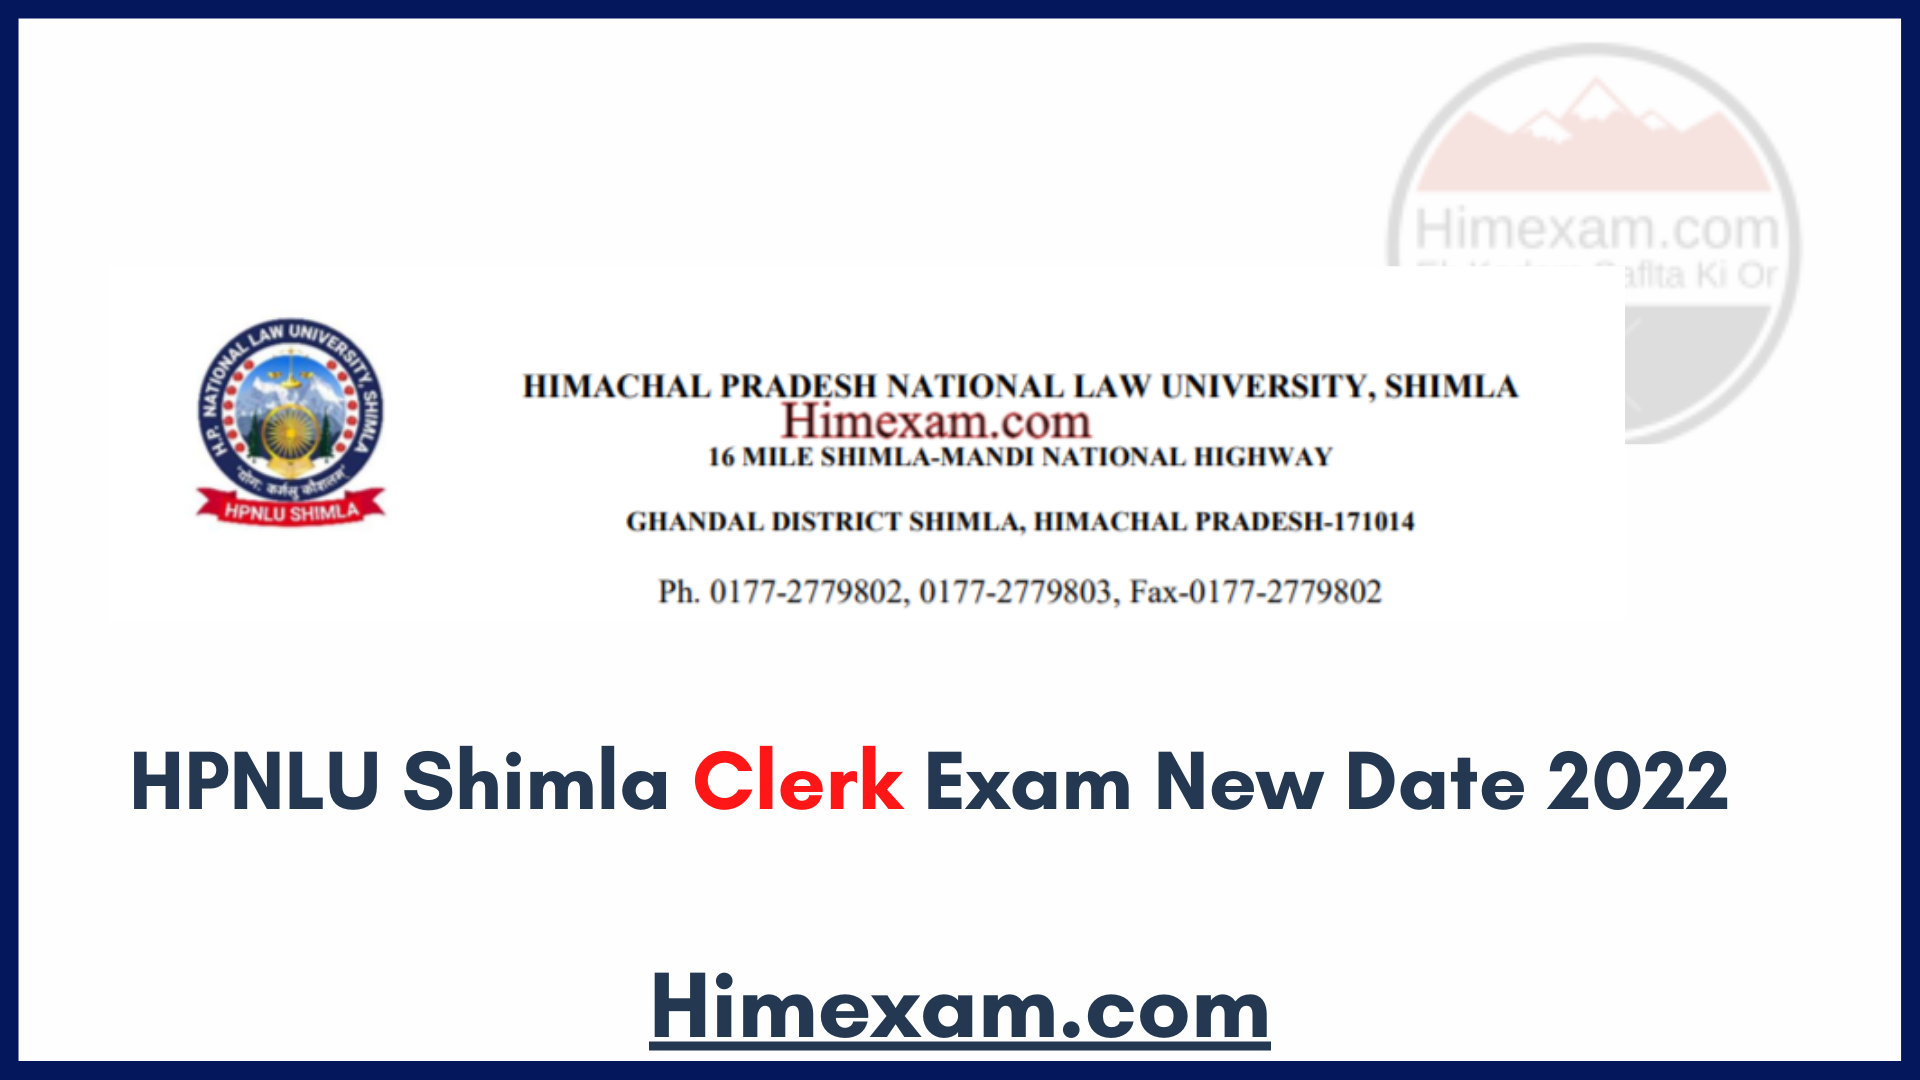 HPNLU Shimla Clerk Exam New Date 2022